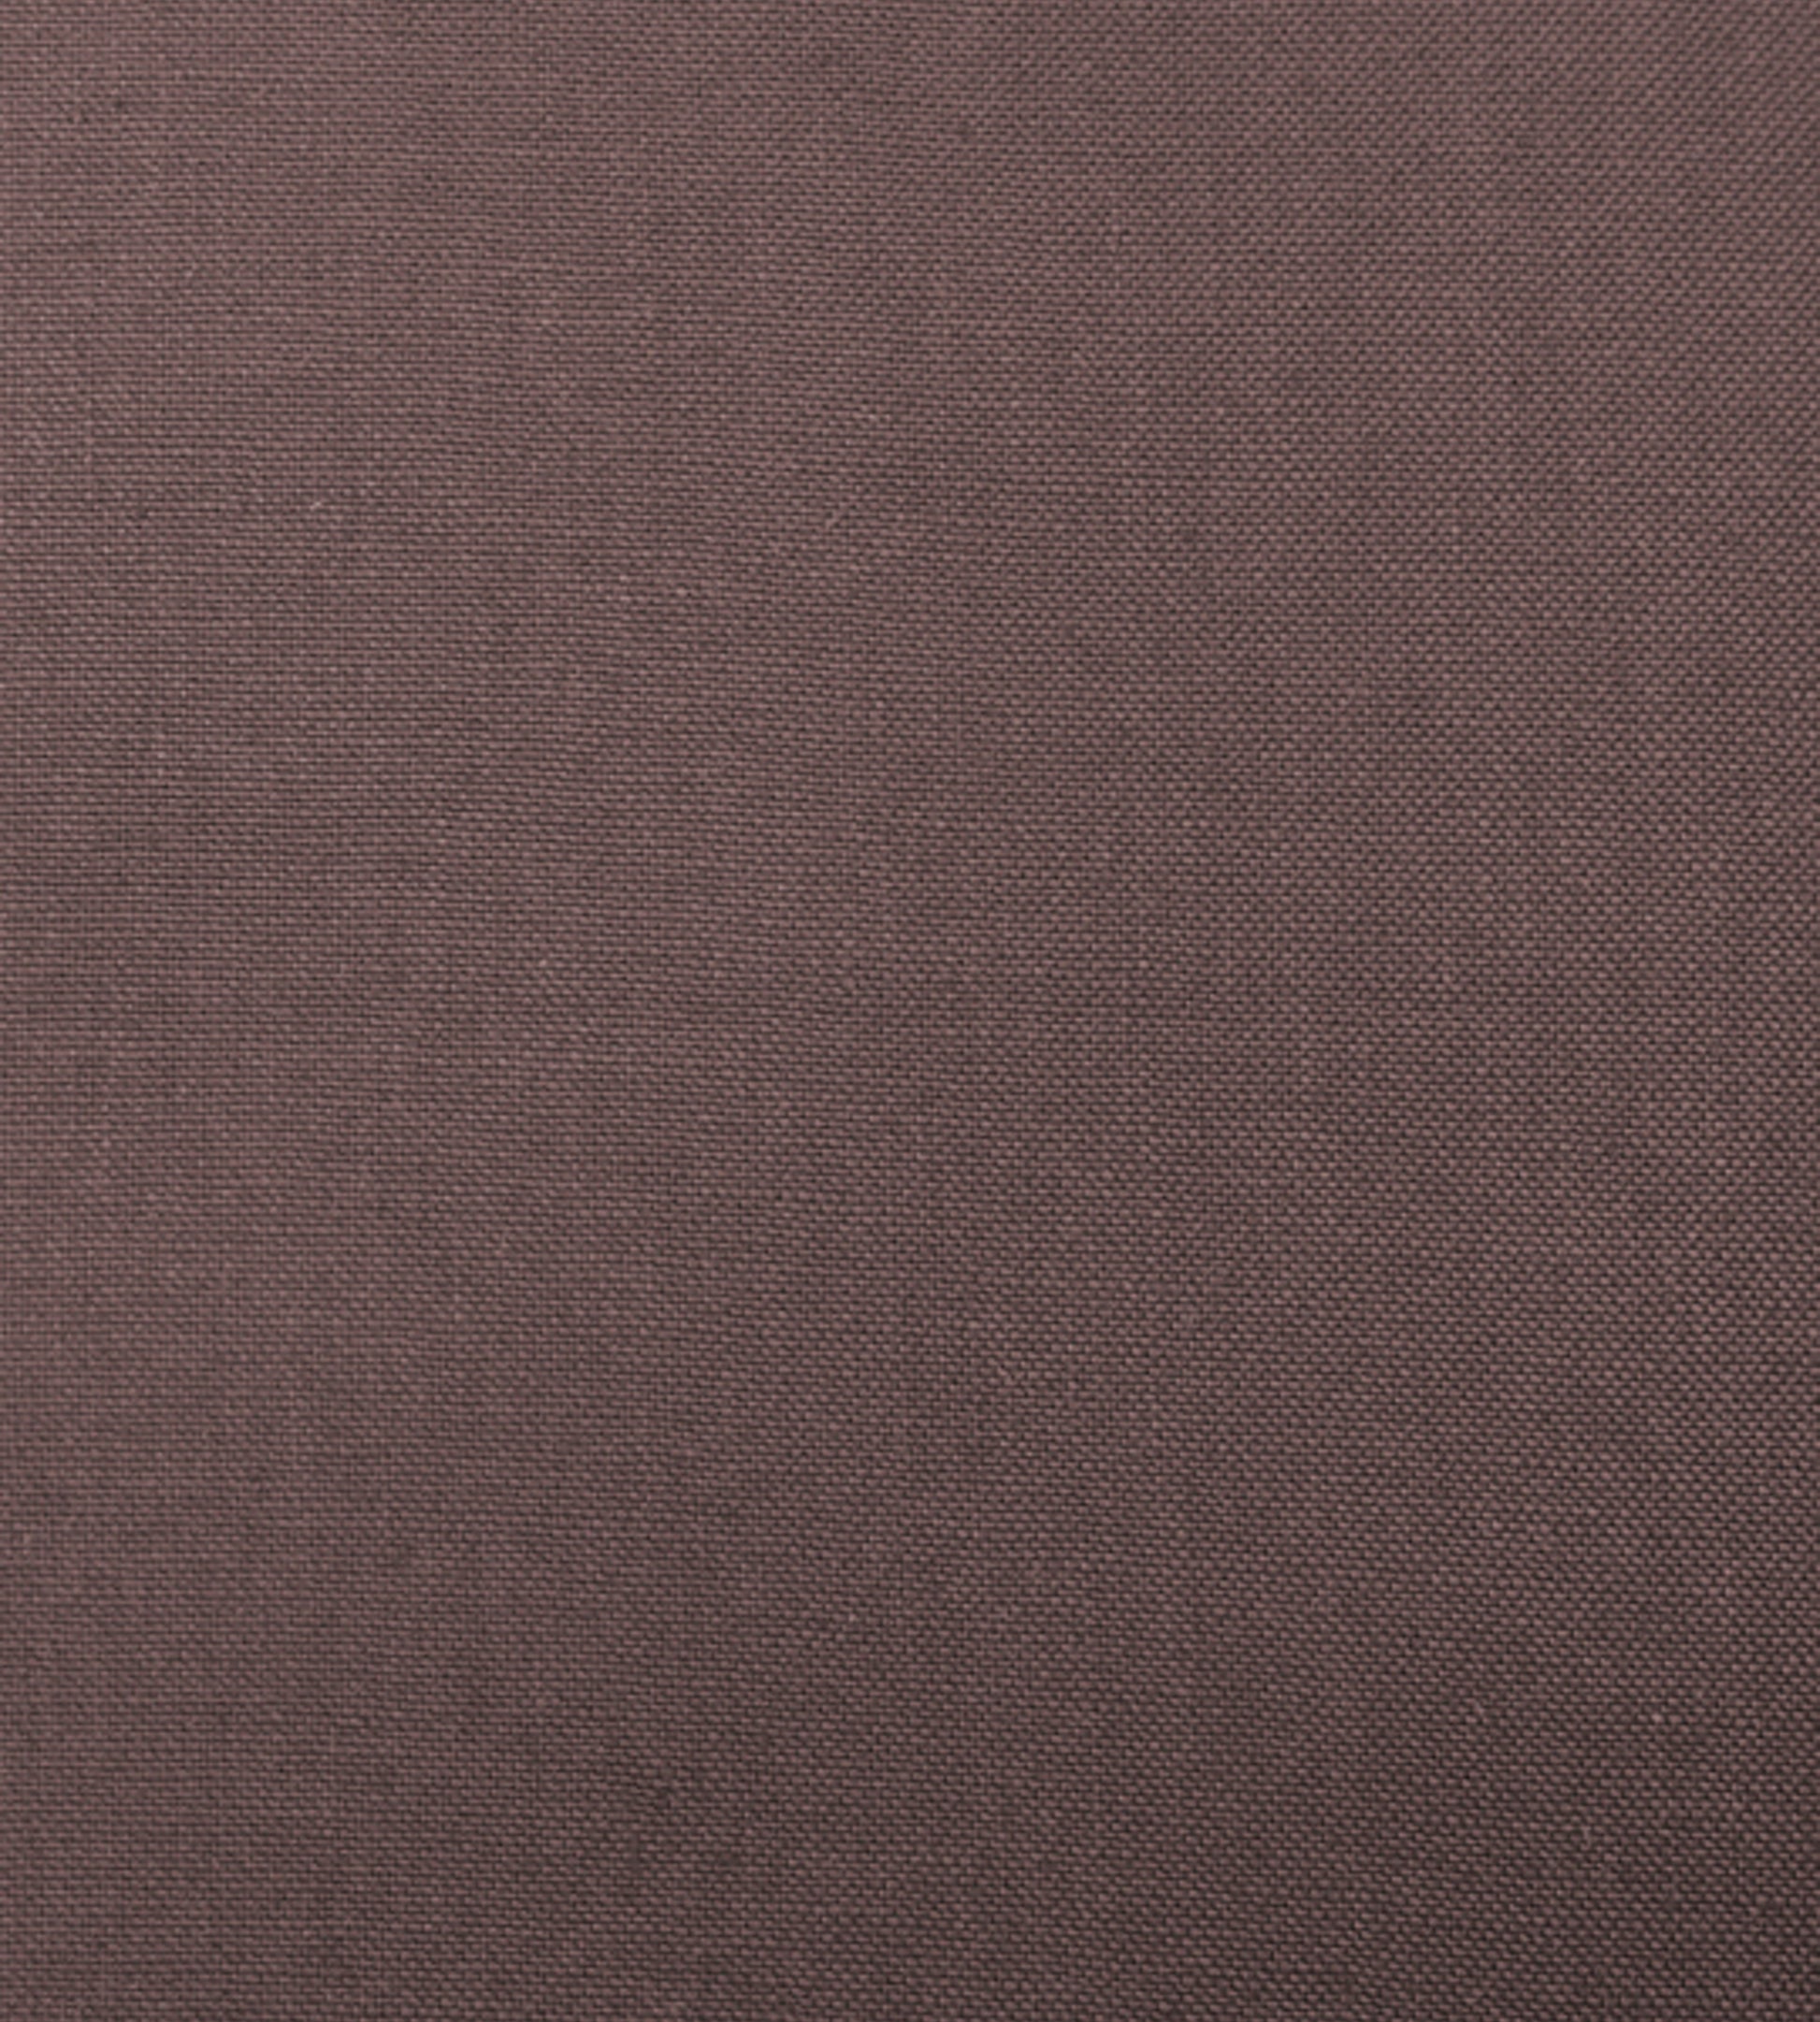 Purchase Scalamandre Fabric SKU# SC 001627108, Toscana Linen Puce 1